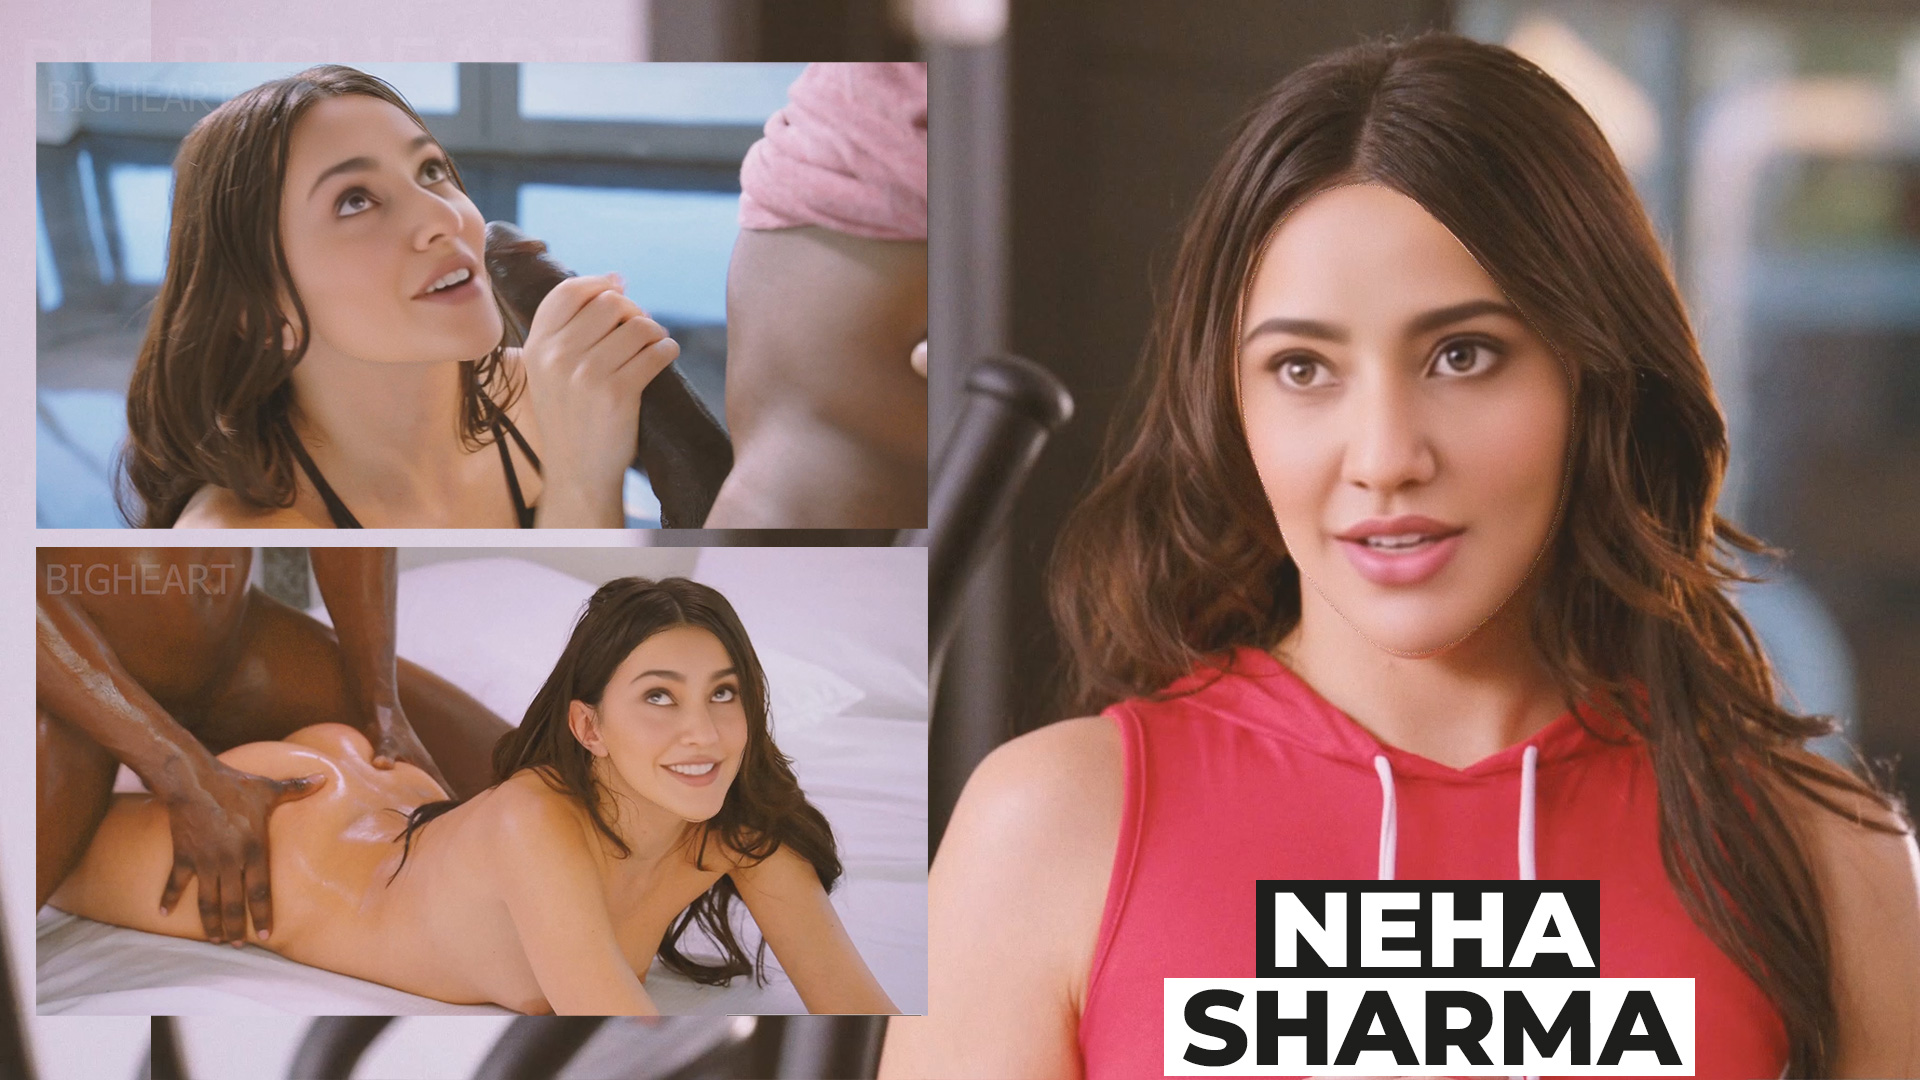 Neha Sex Hd - 42:45) Neha Sharma Fucked After Workout - BLACKED DeepFake Porn -  MrDeepFakes